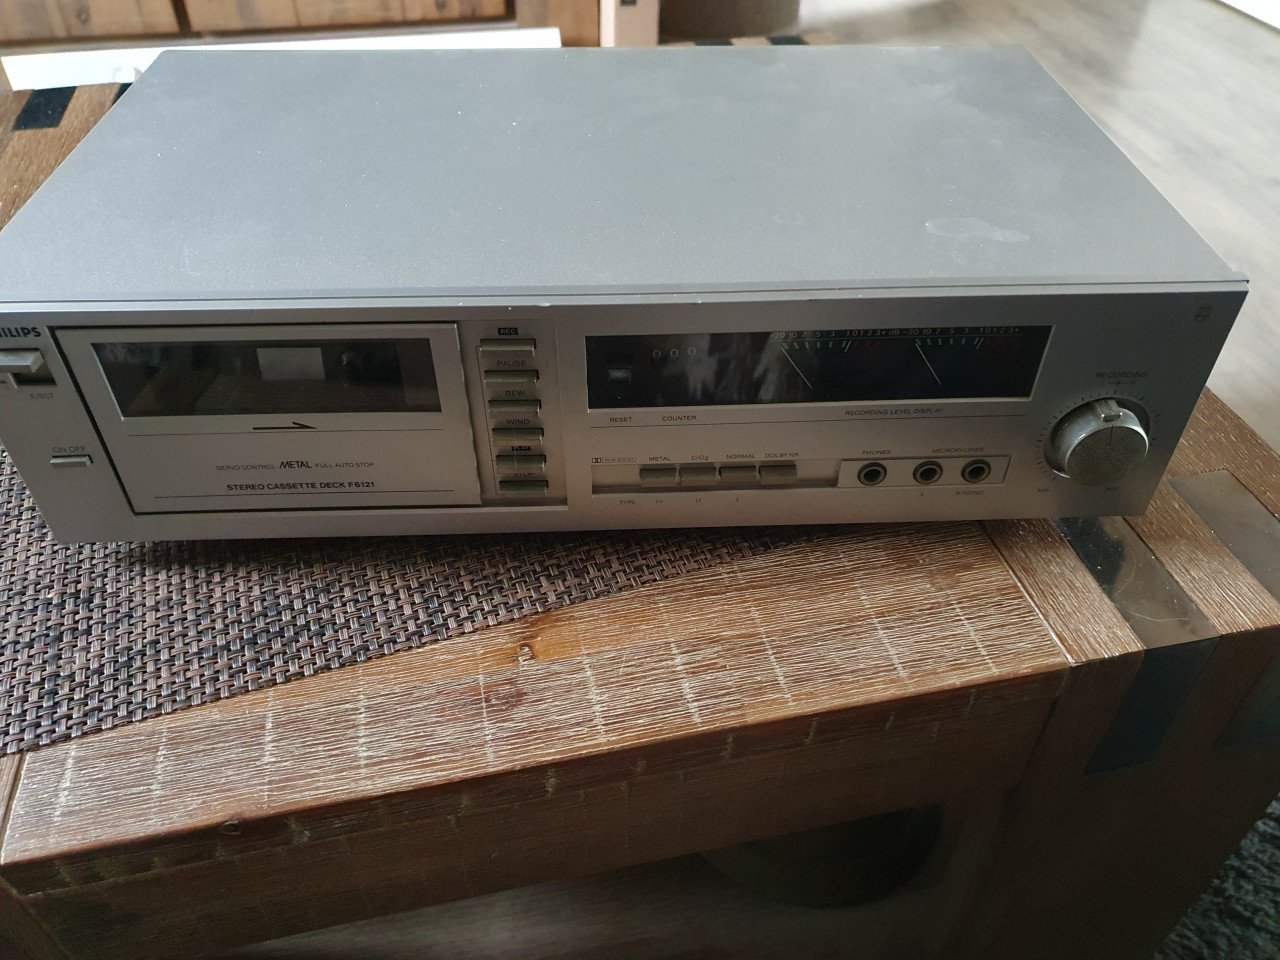 Mooi vintage metalen/zilver Philips F6121 Stereo Cassette Deck....